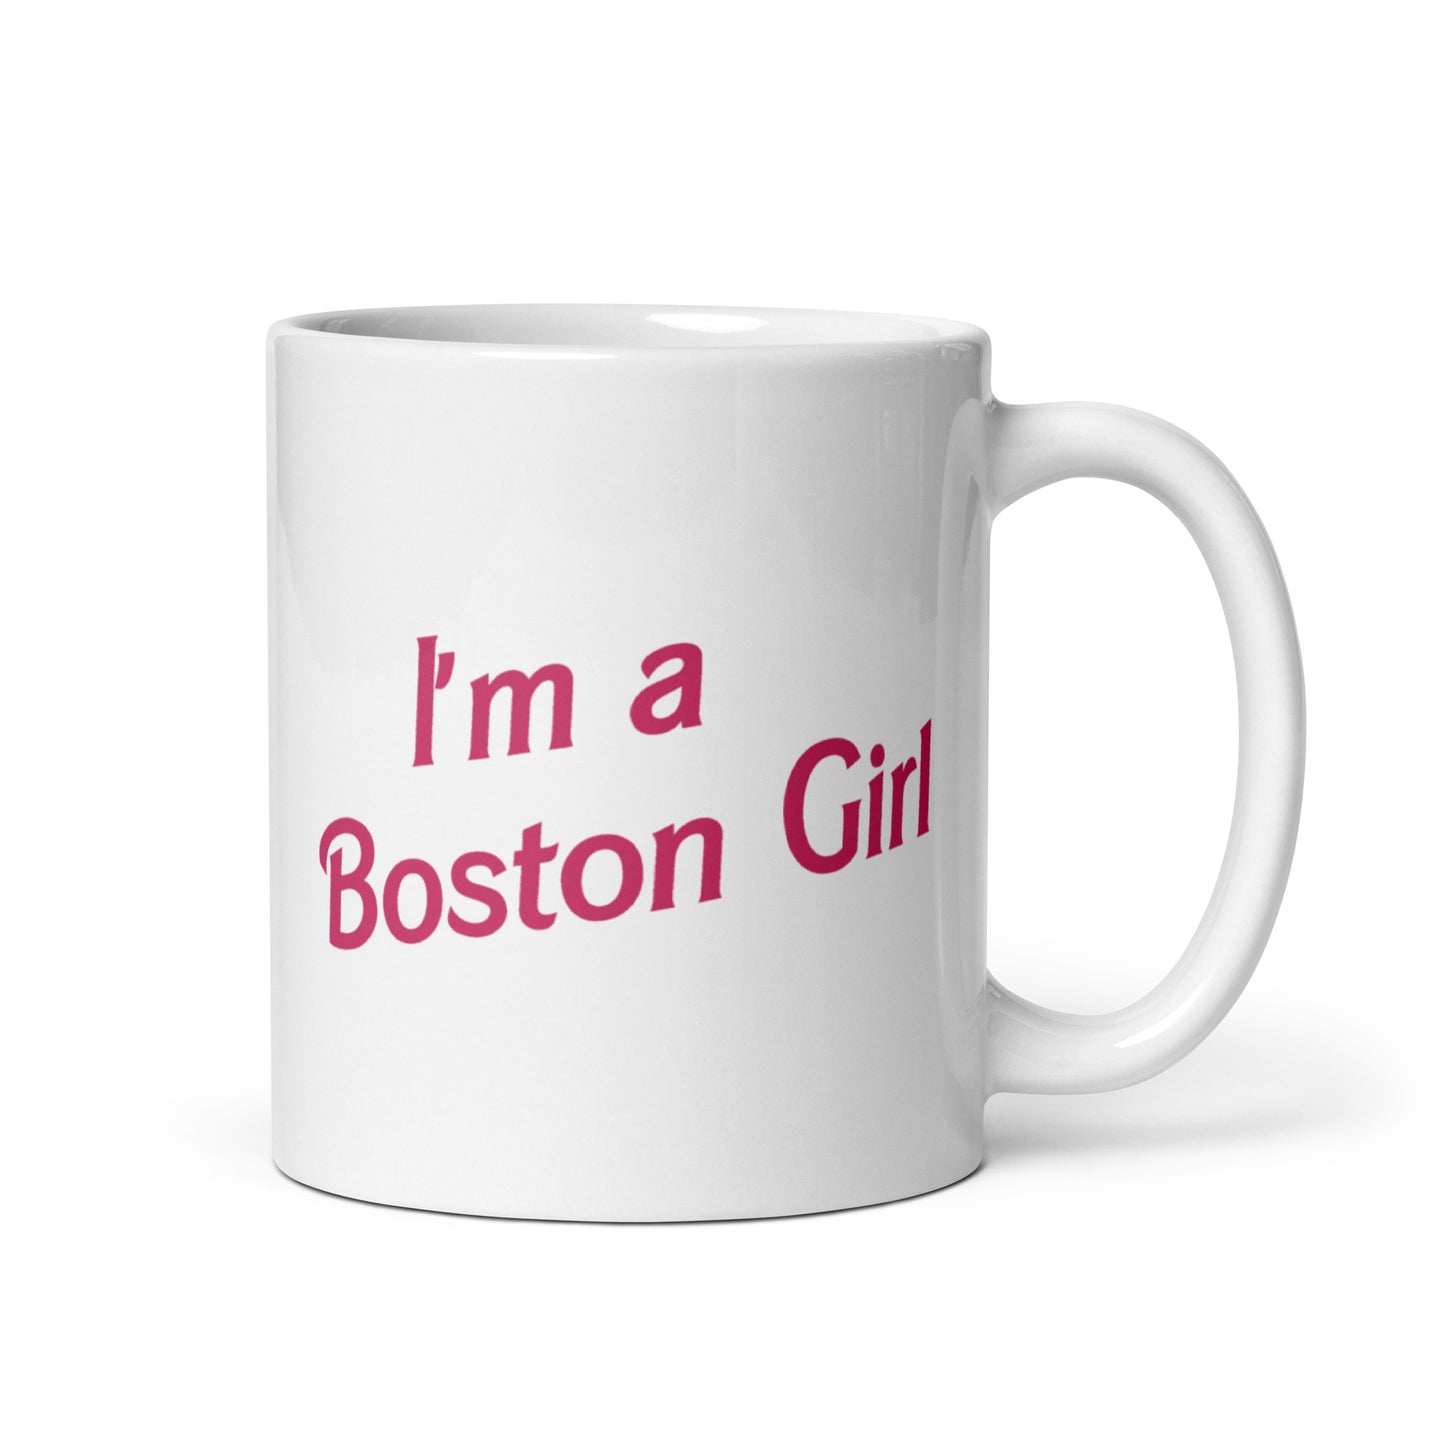 I'm a Boston Girl Mug